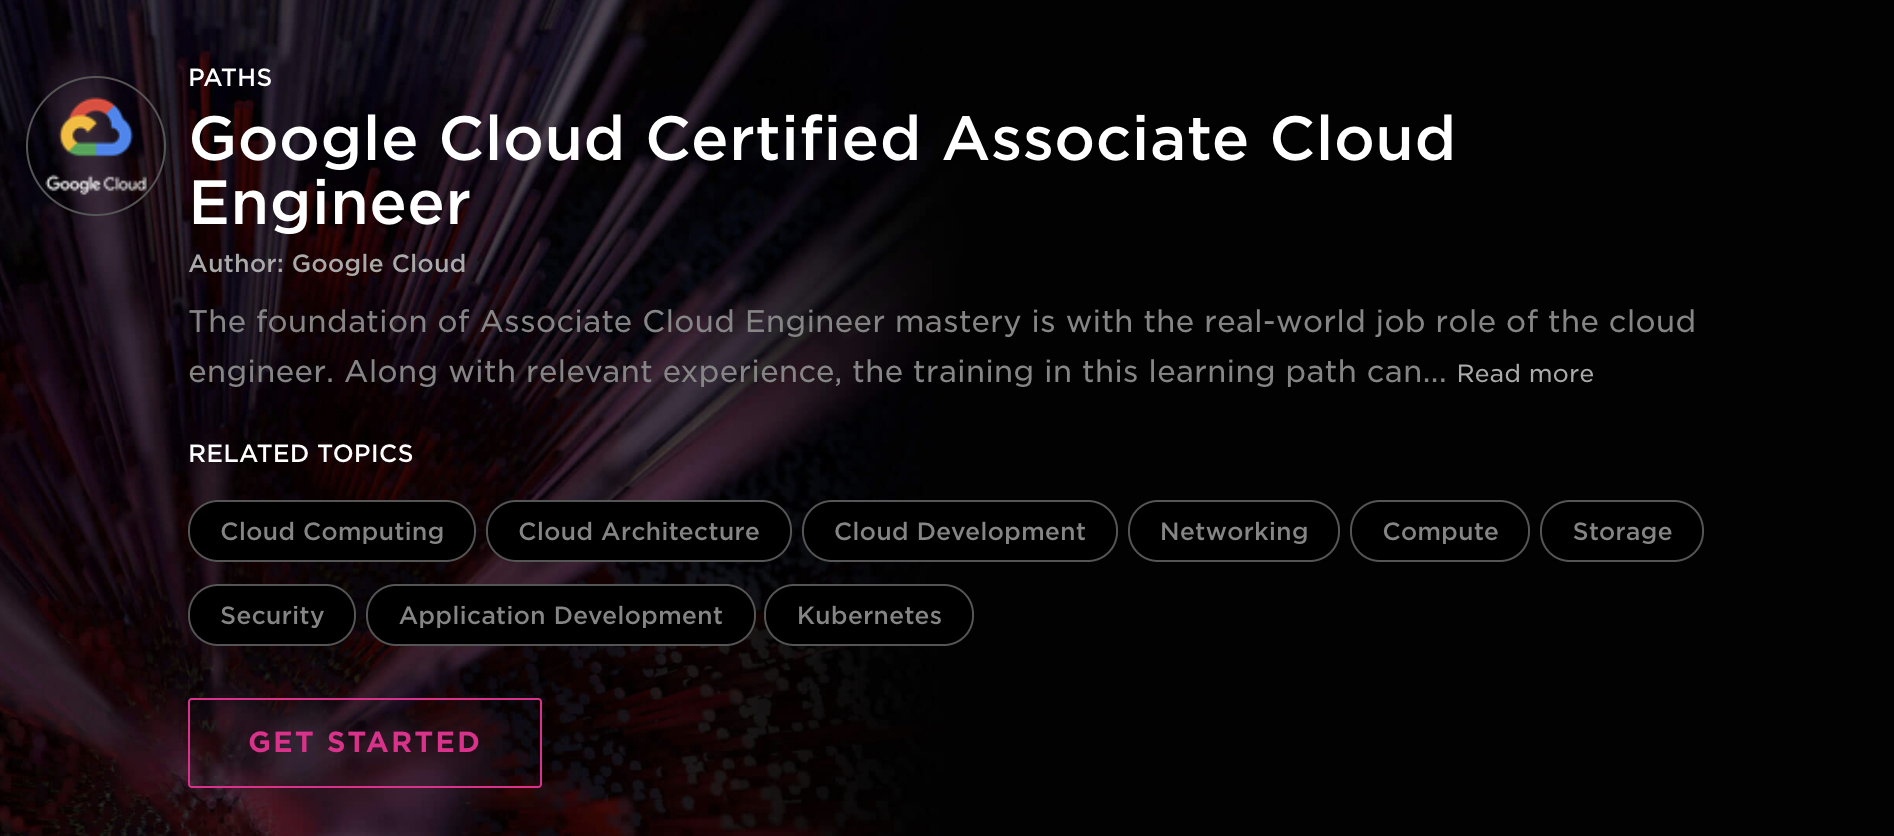 Google Cloud Certified Associate Cloud Engineer learning path